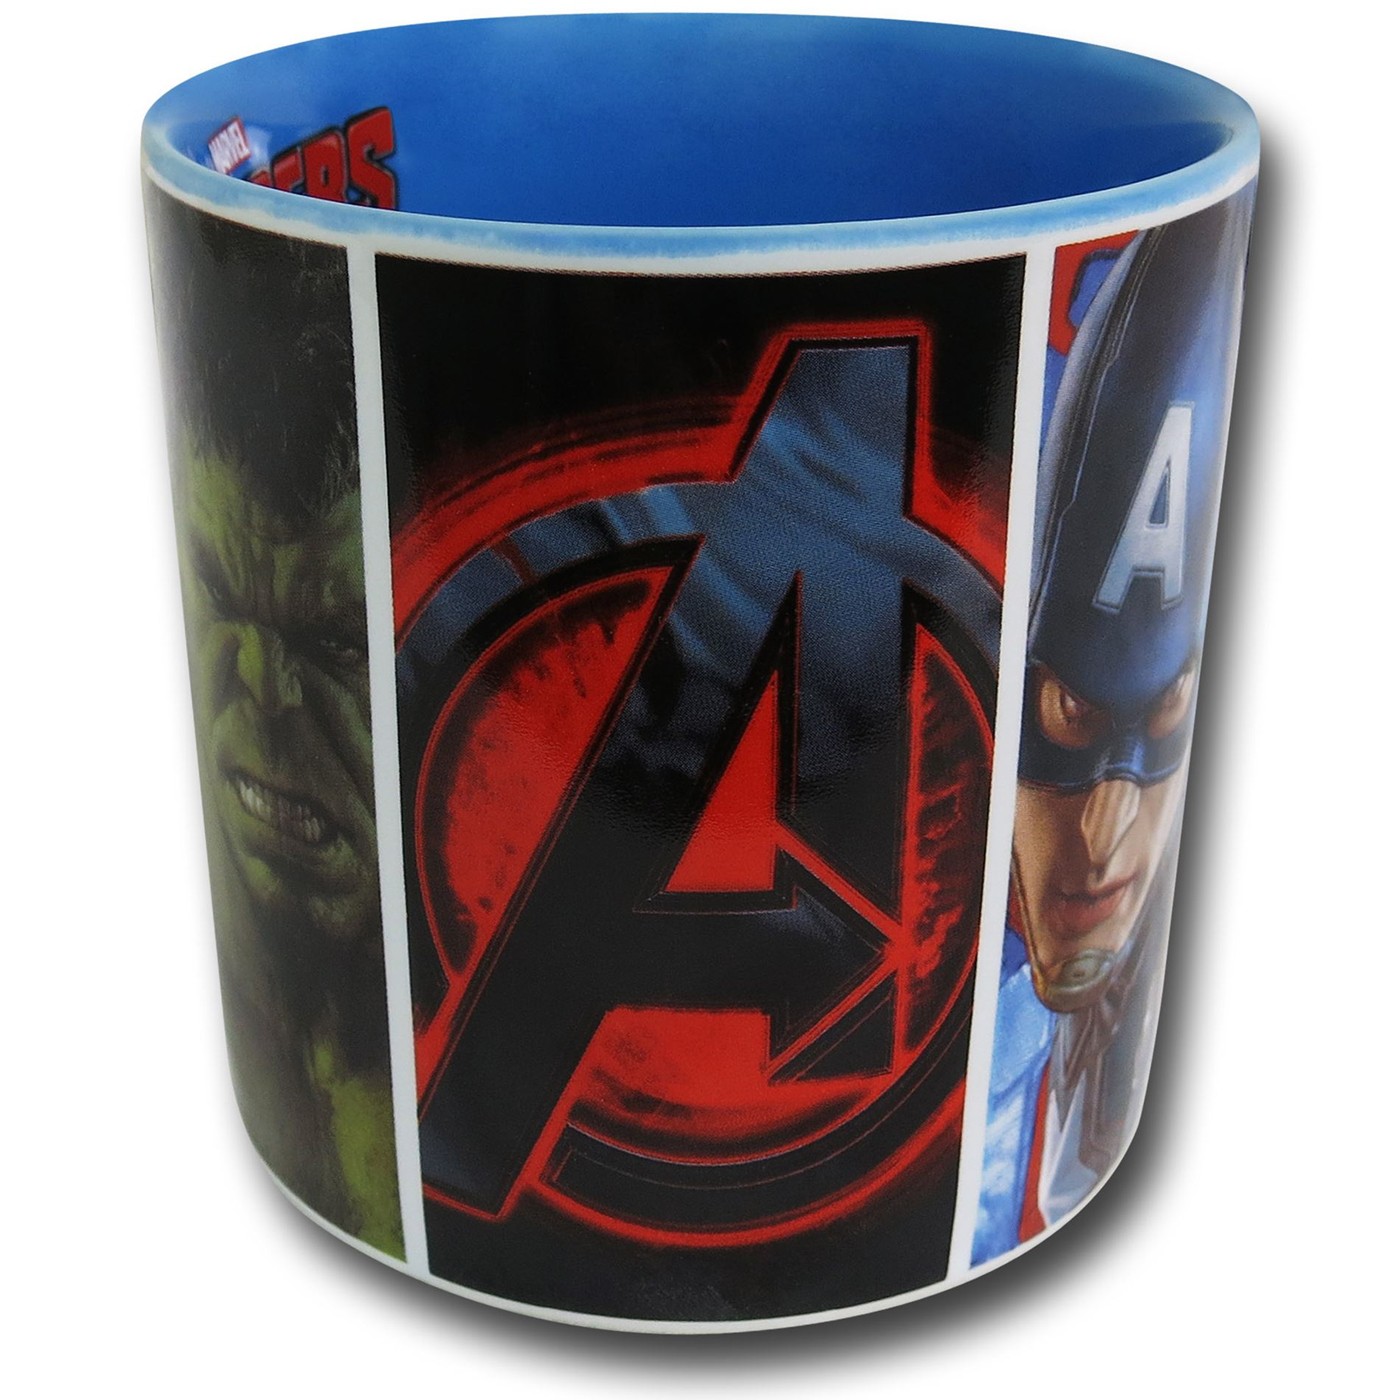 Avengers Age of Ultron Ceramic Mug